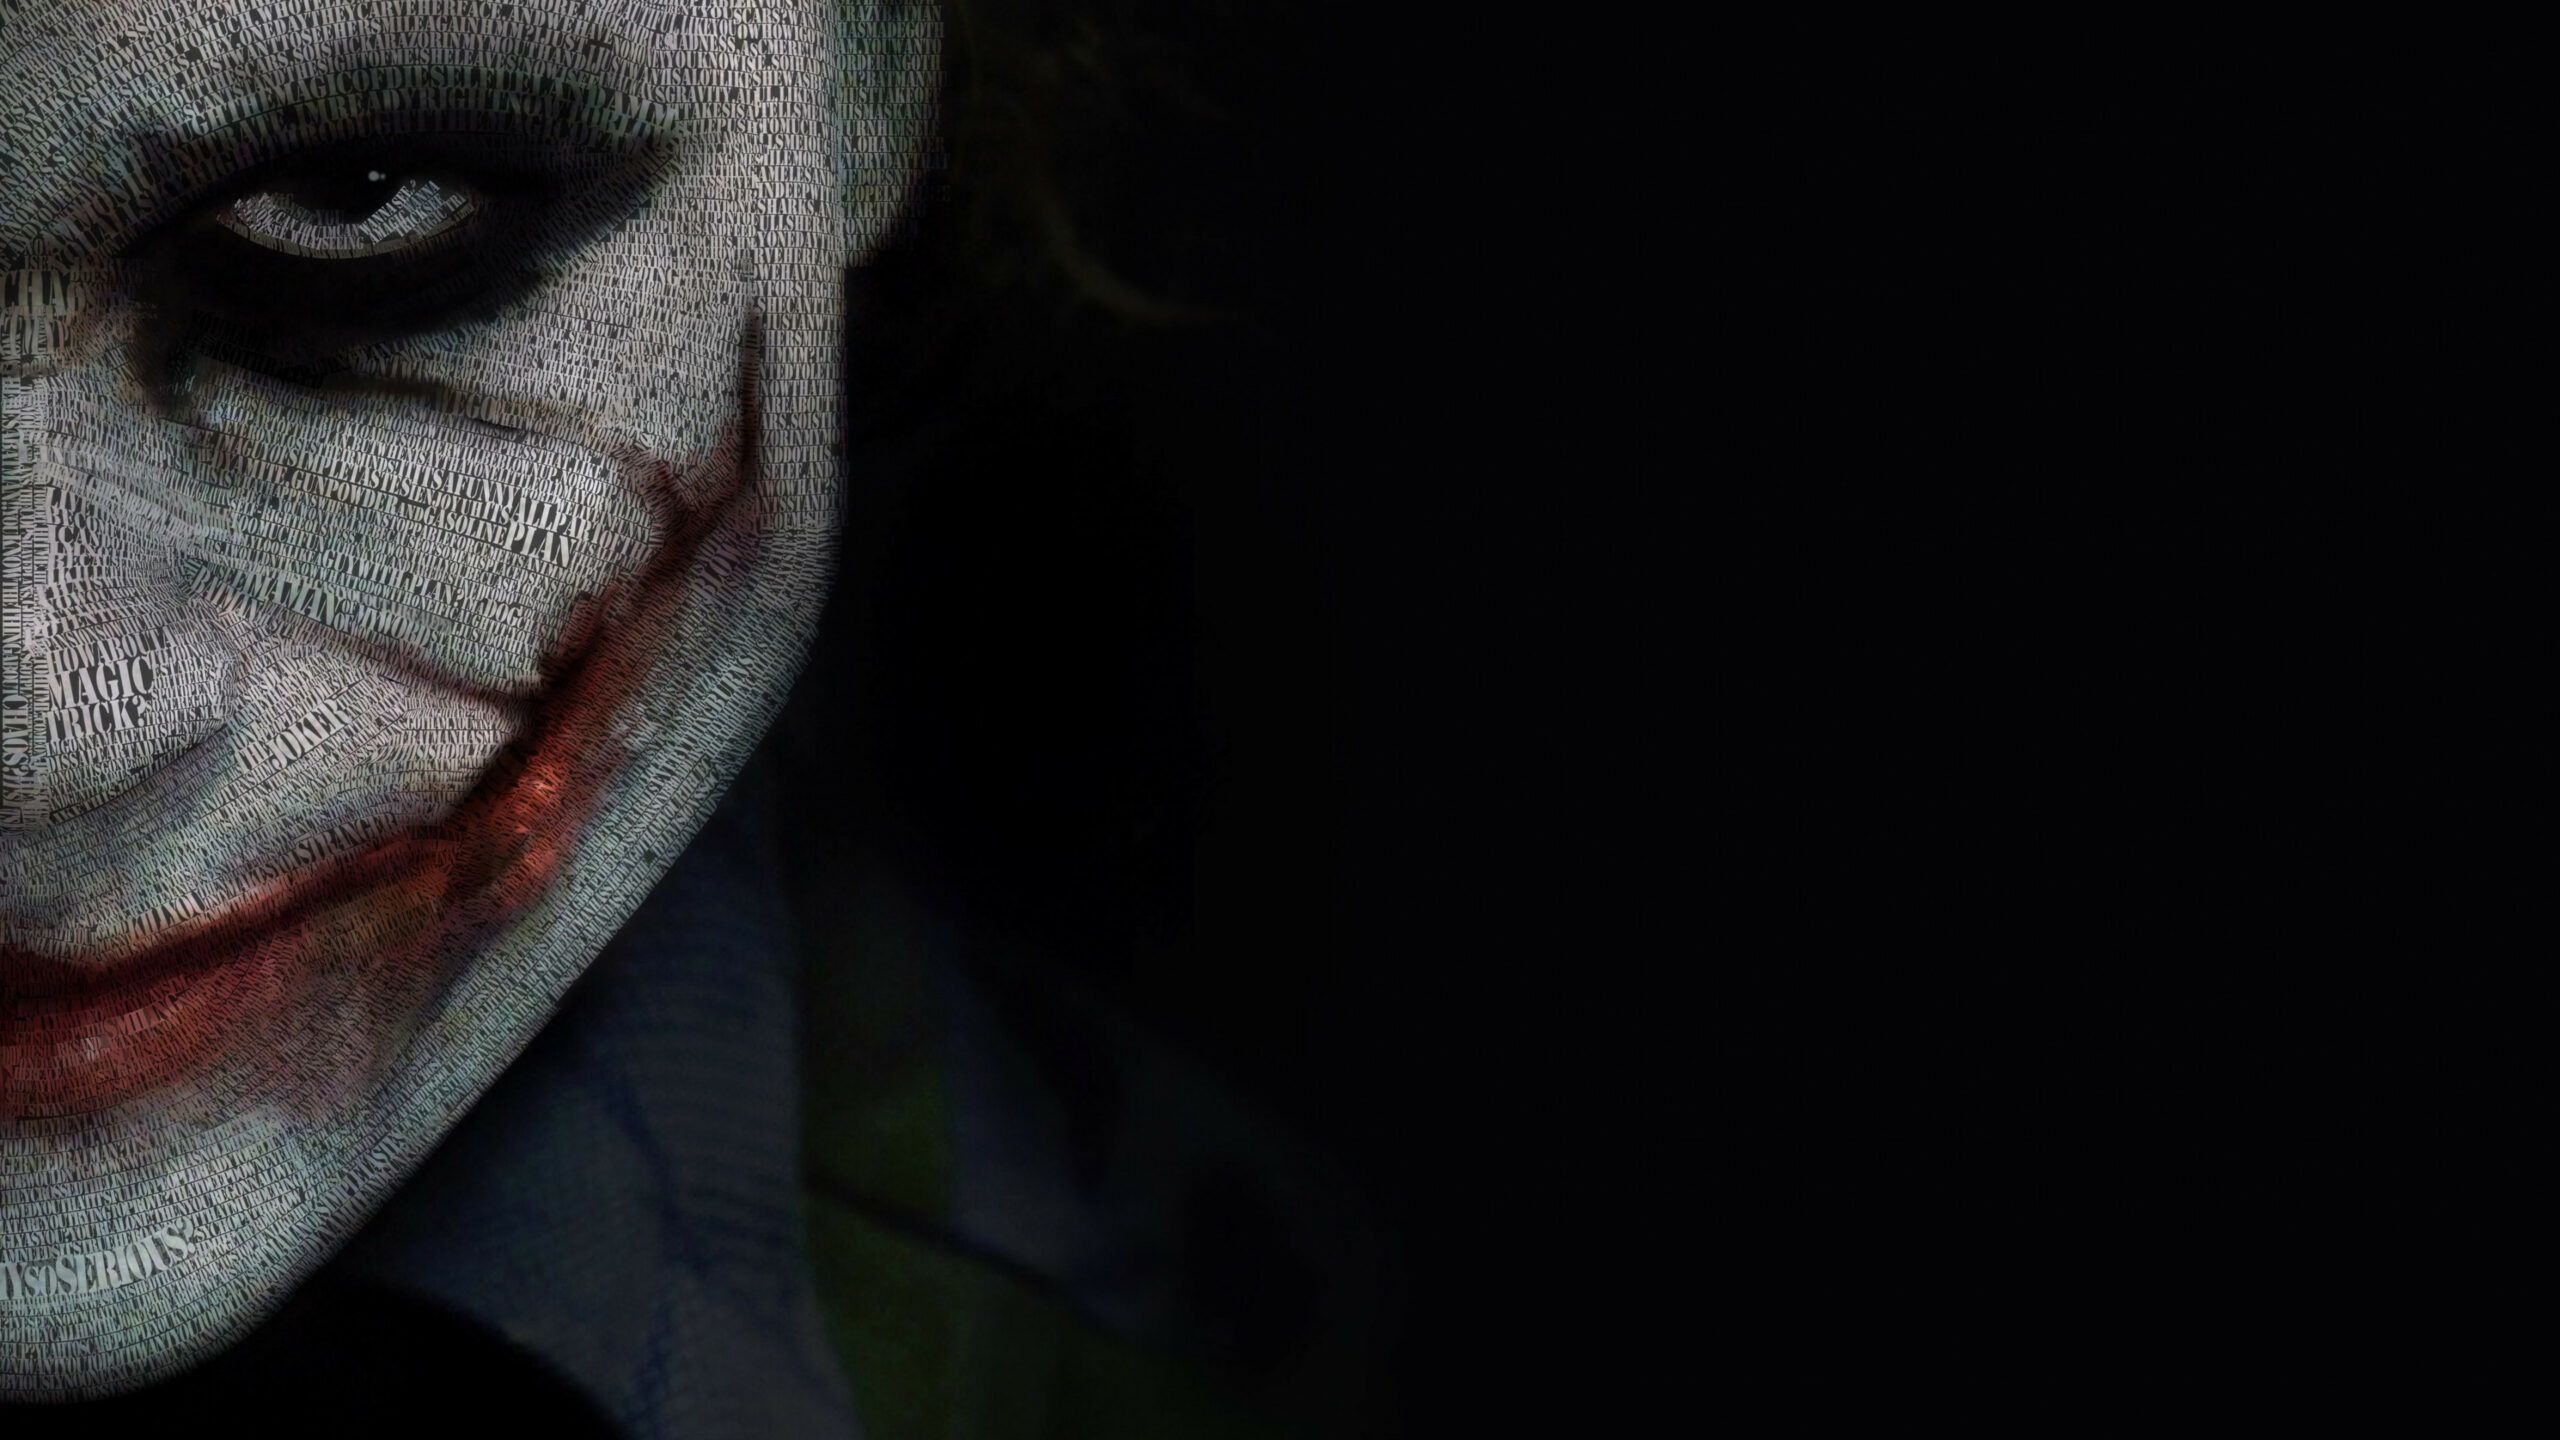 Joker 4k Ultra HD Wallpaper Download. Joker pics, 4k wallpaper for mobile, Joker HD wallpaper